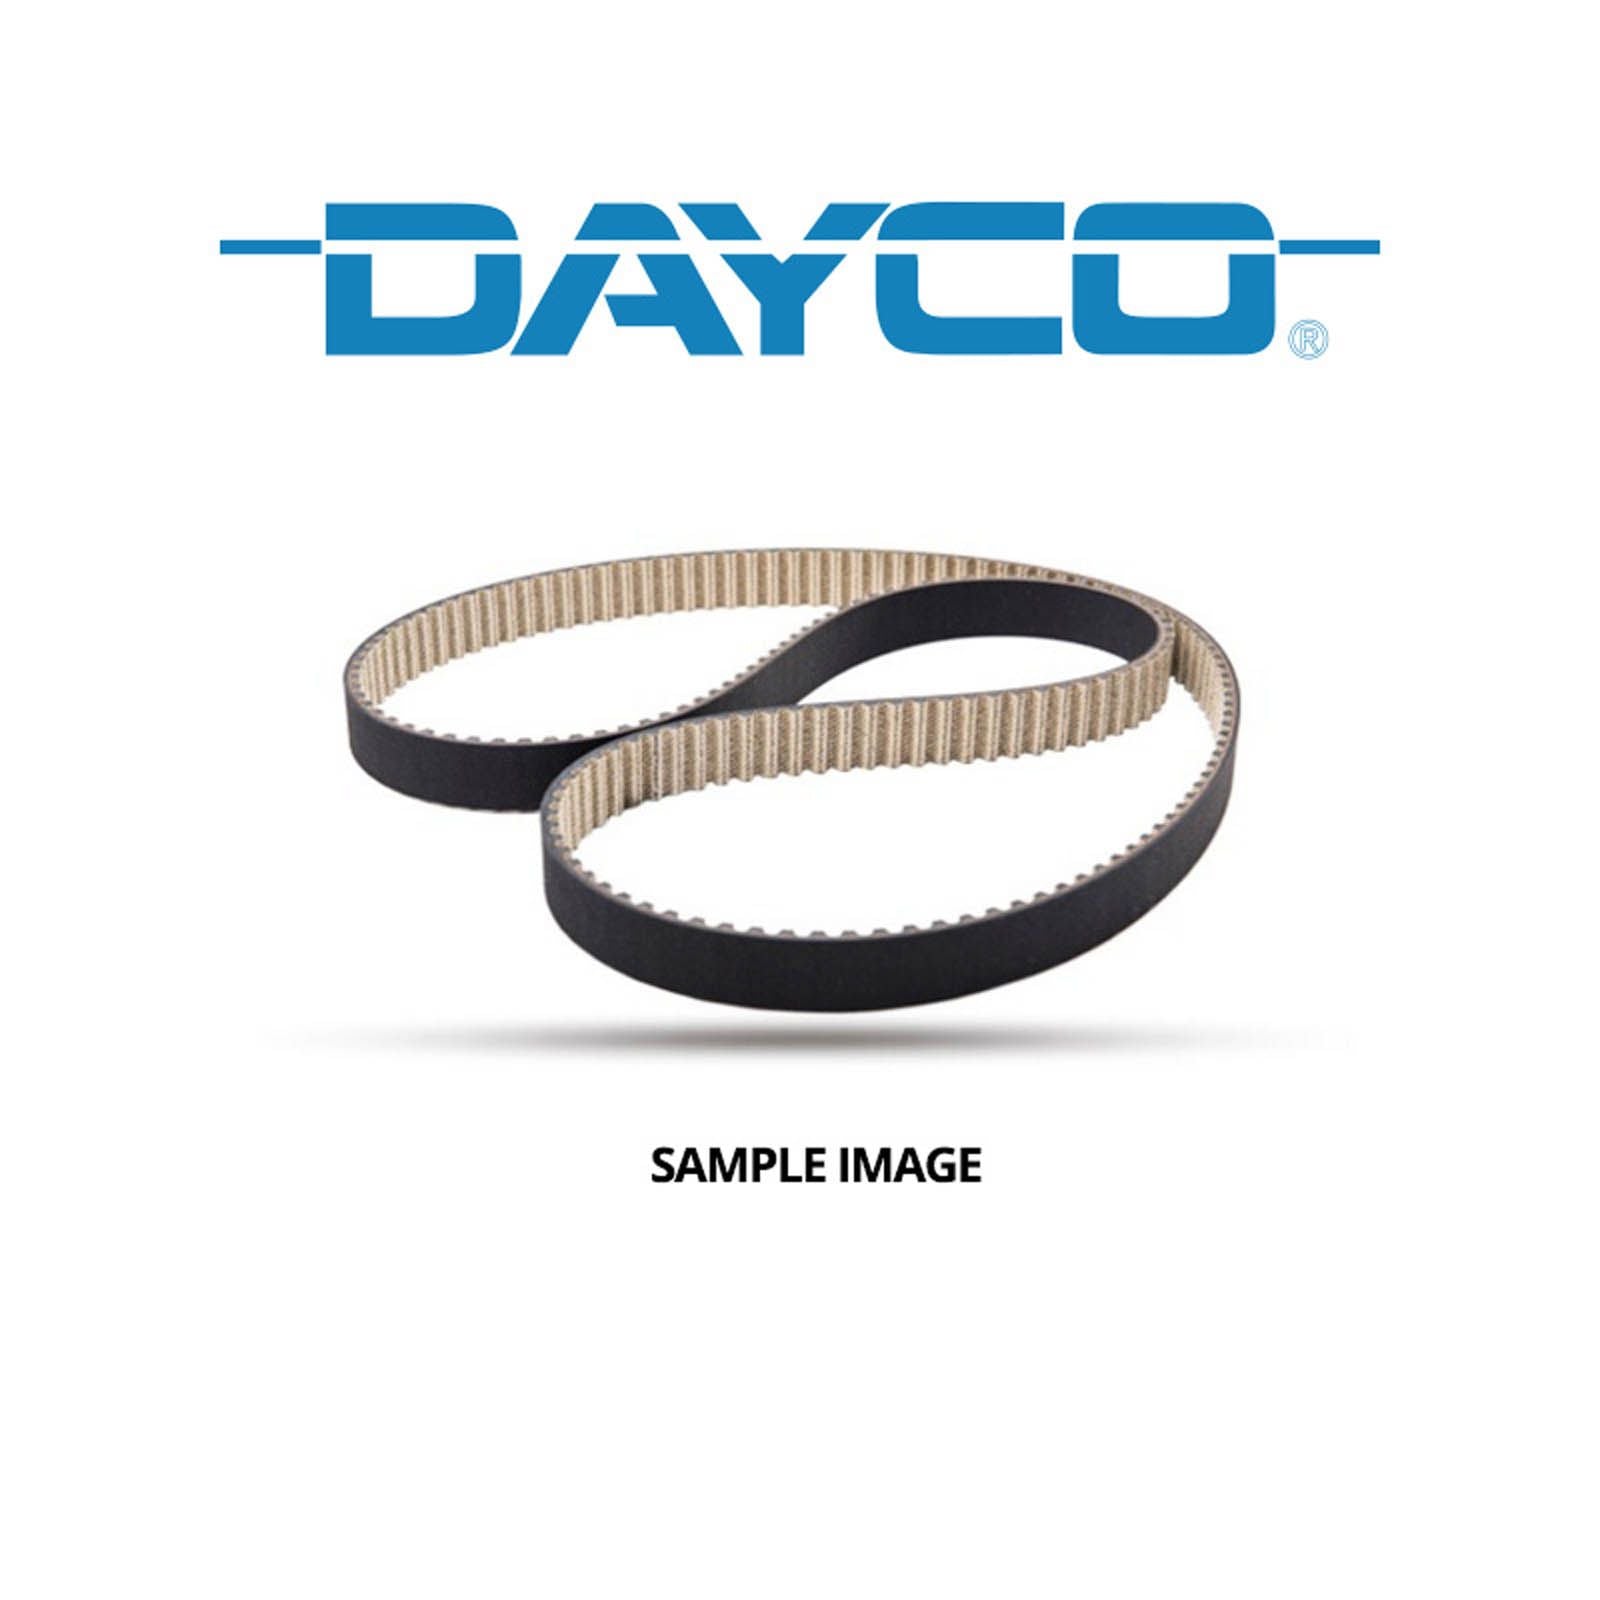 New DAYCO ATV Drive Belt HP 30.0 X 997 HP2020 #ATVDBHP2020